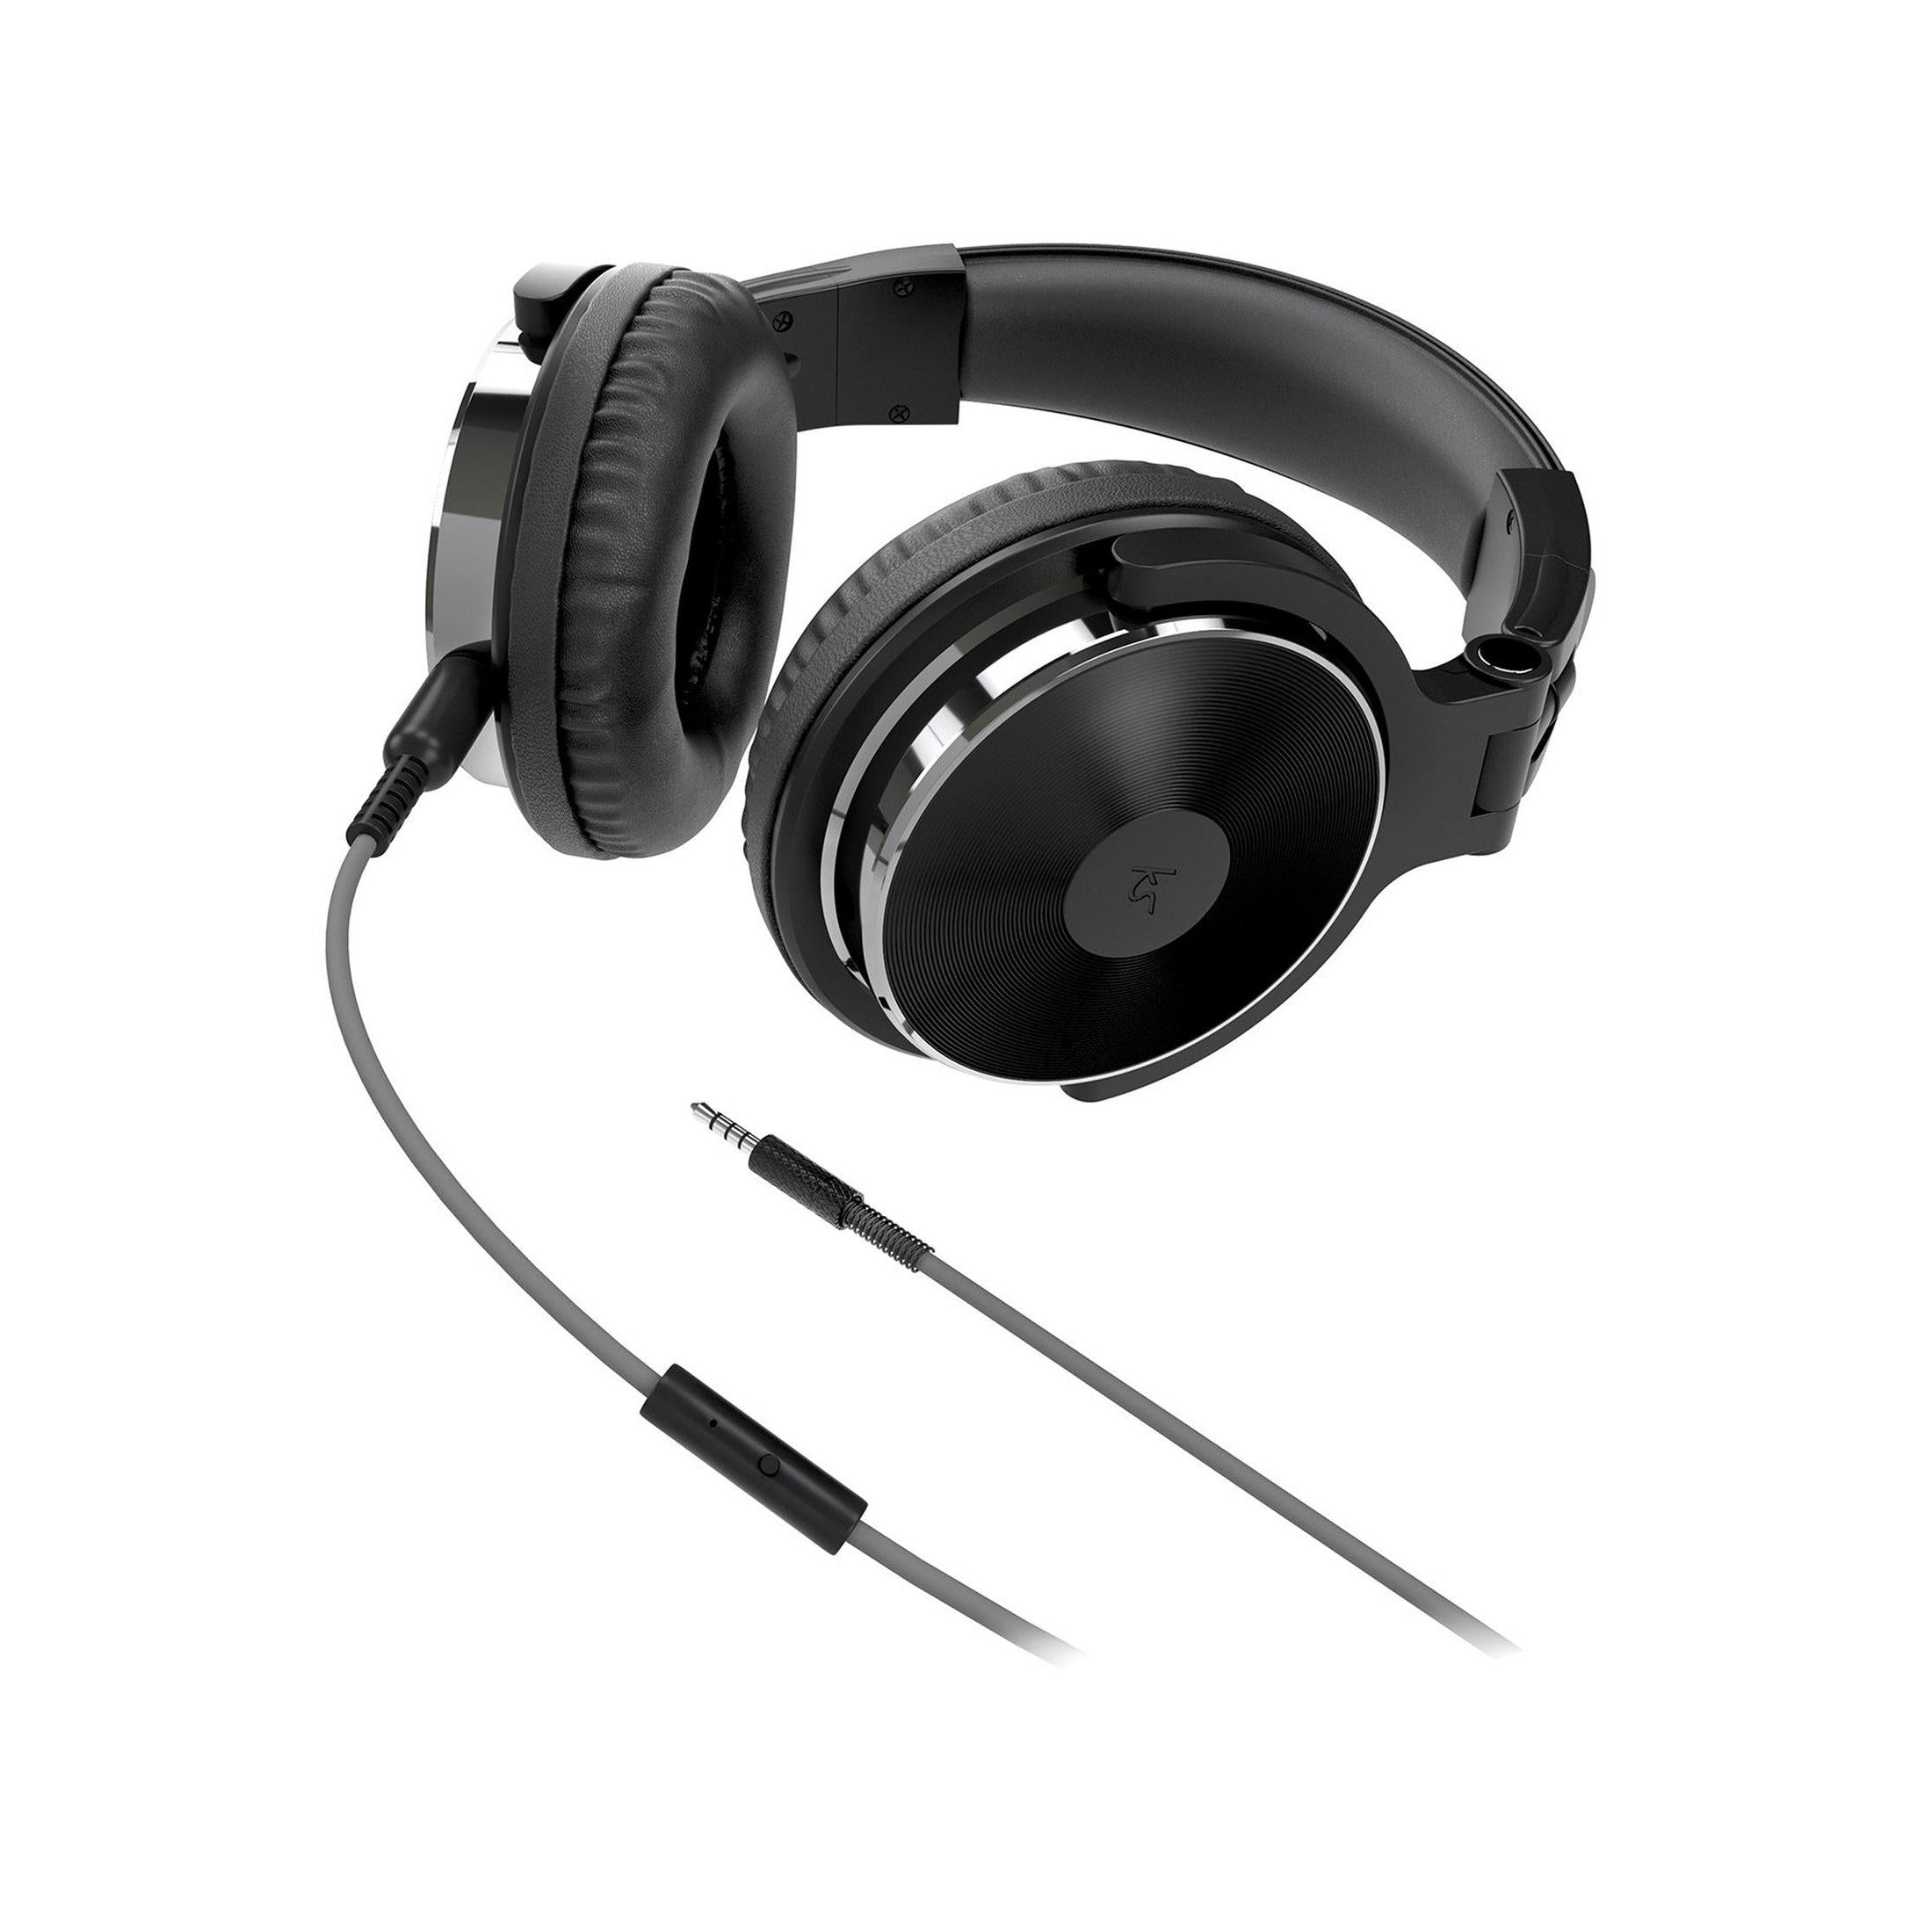 Kitsound KSNDJBK DJ 2 Wired Headphones - Black - Refurbished Good